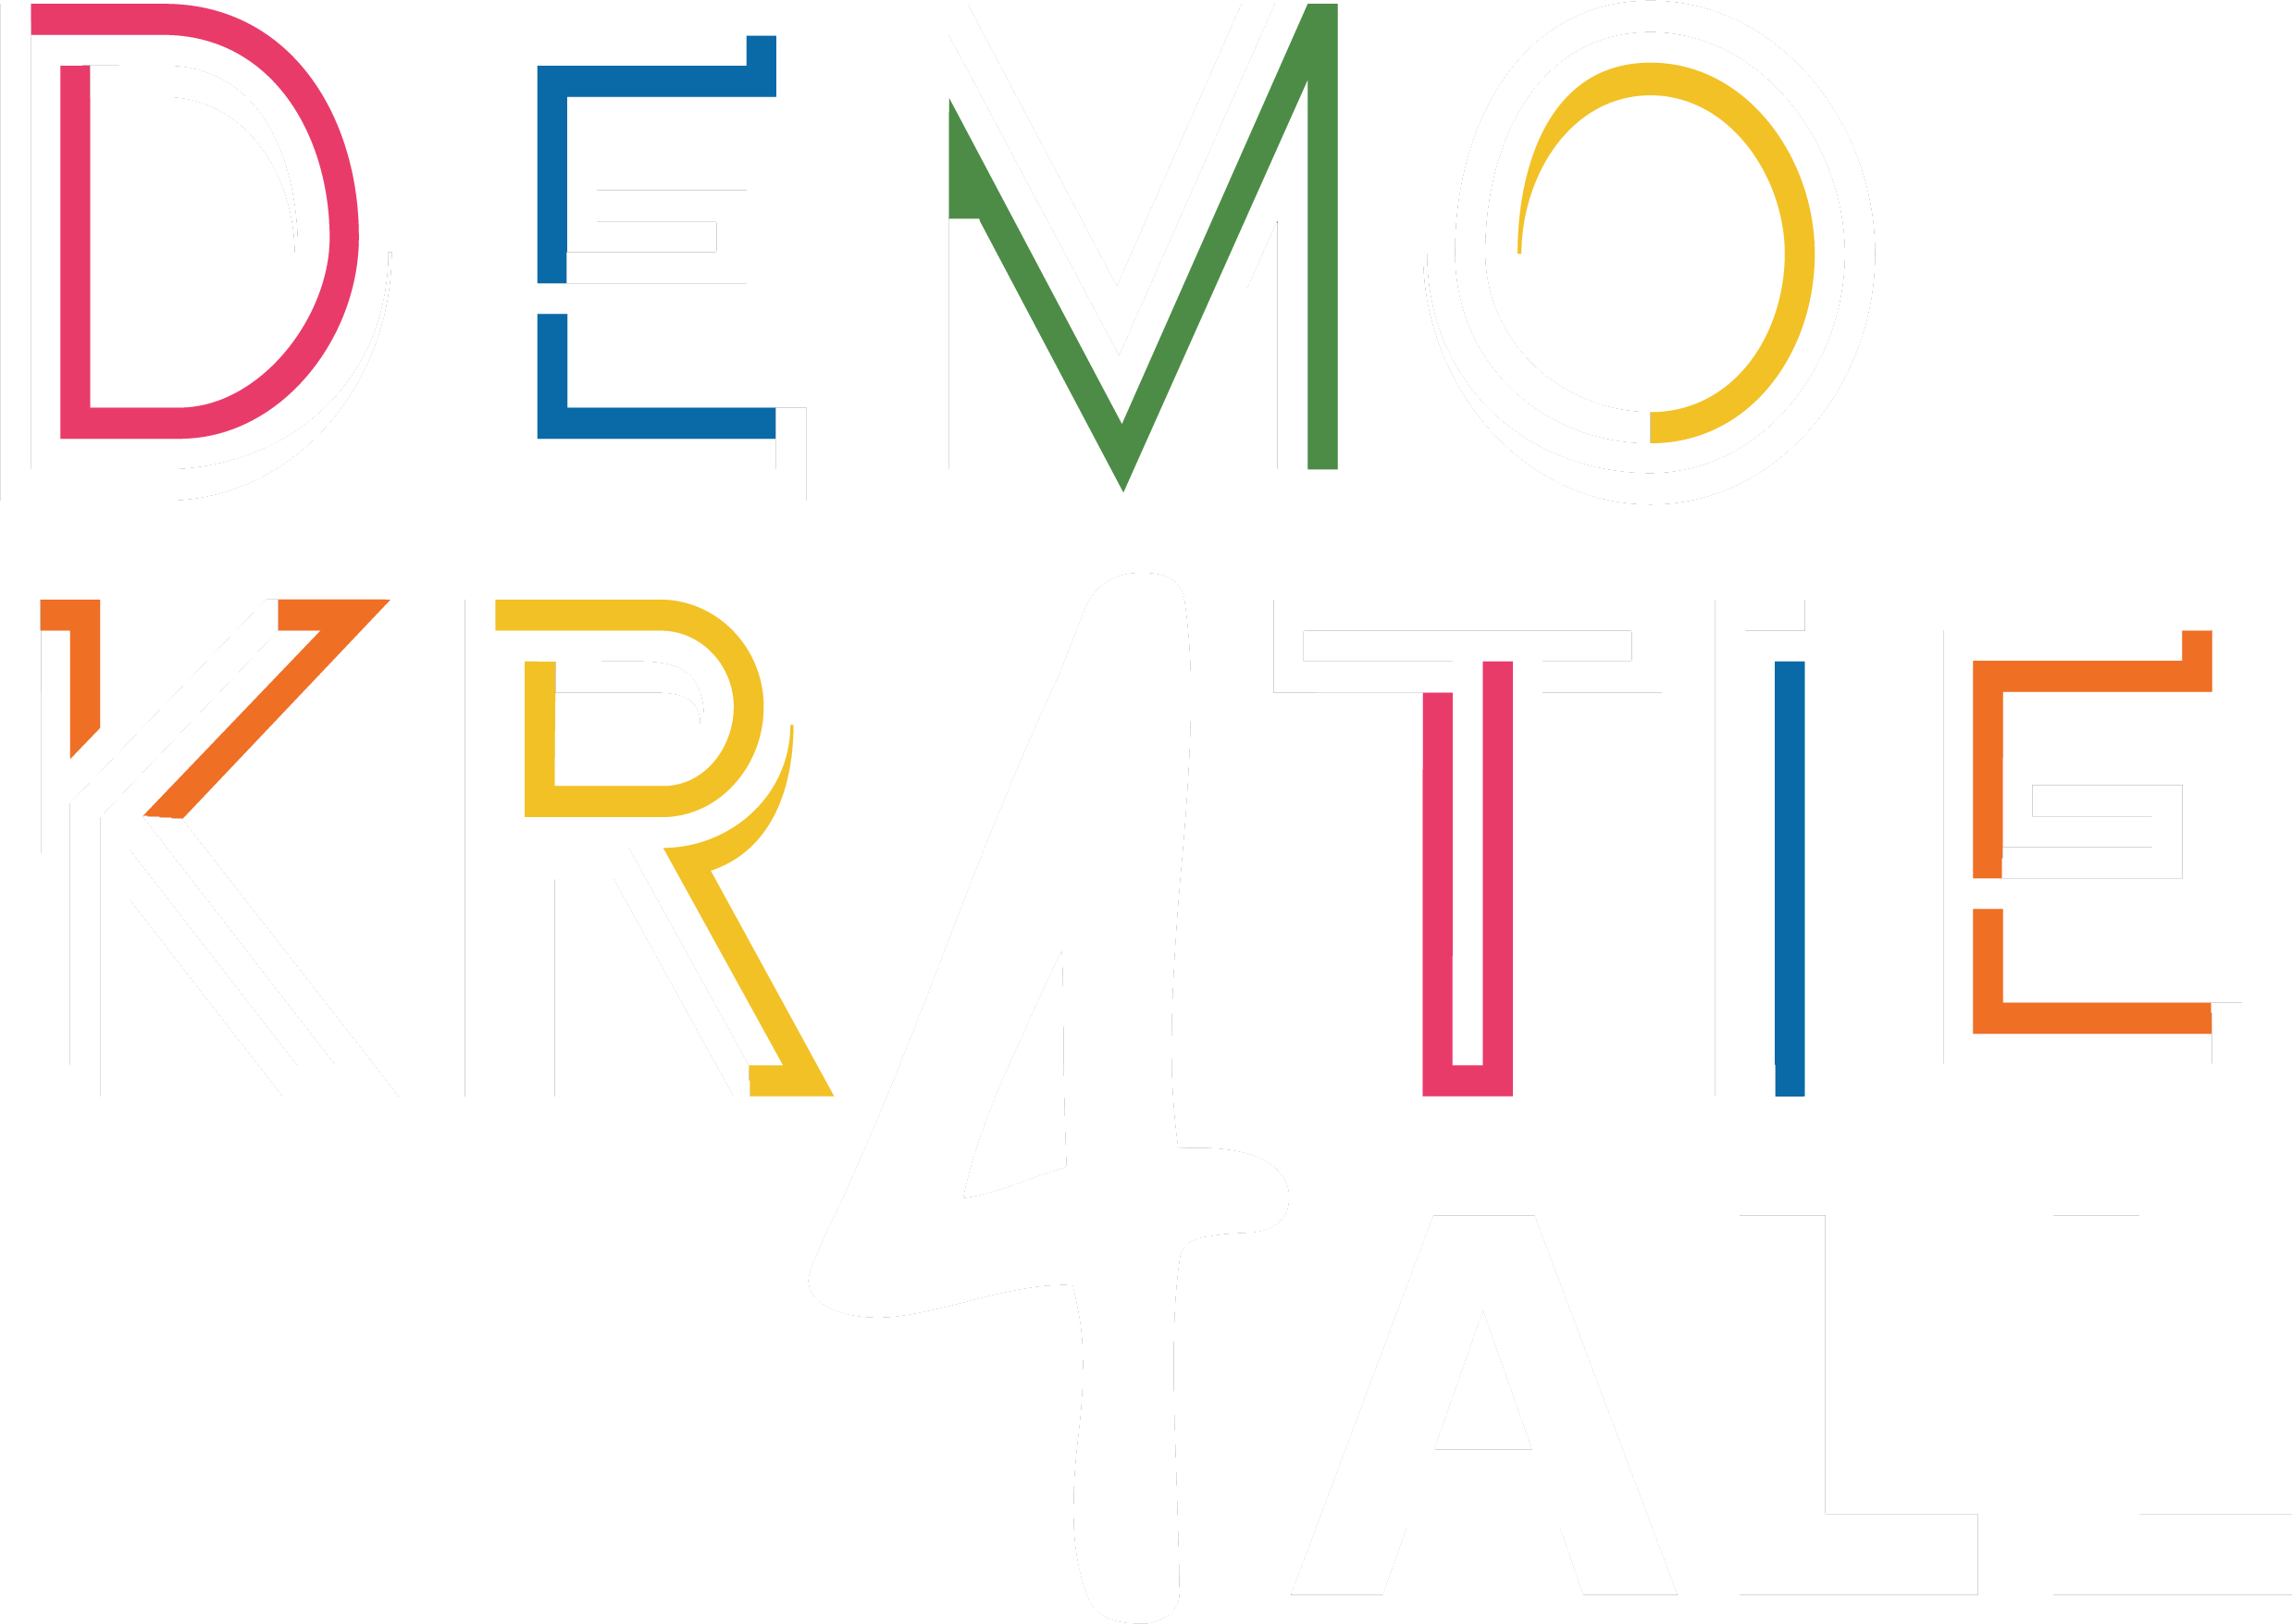 DEMOkratie4All